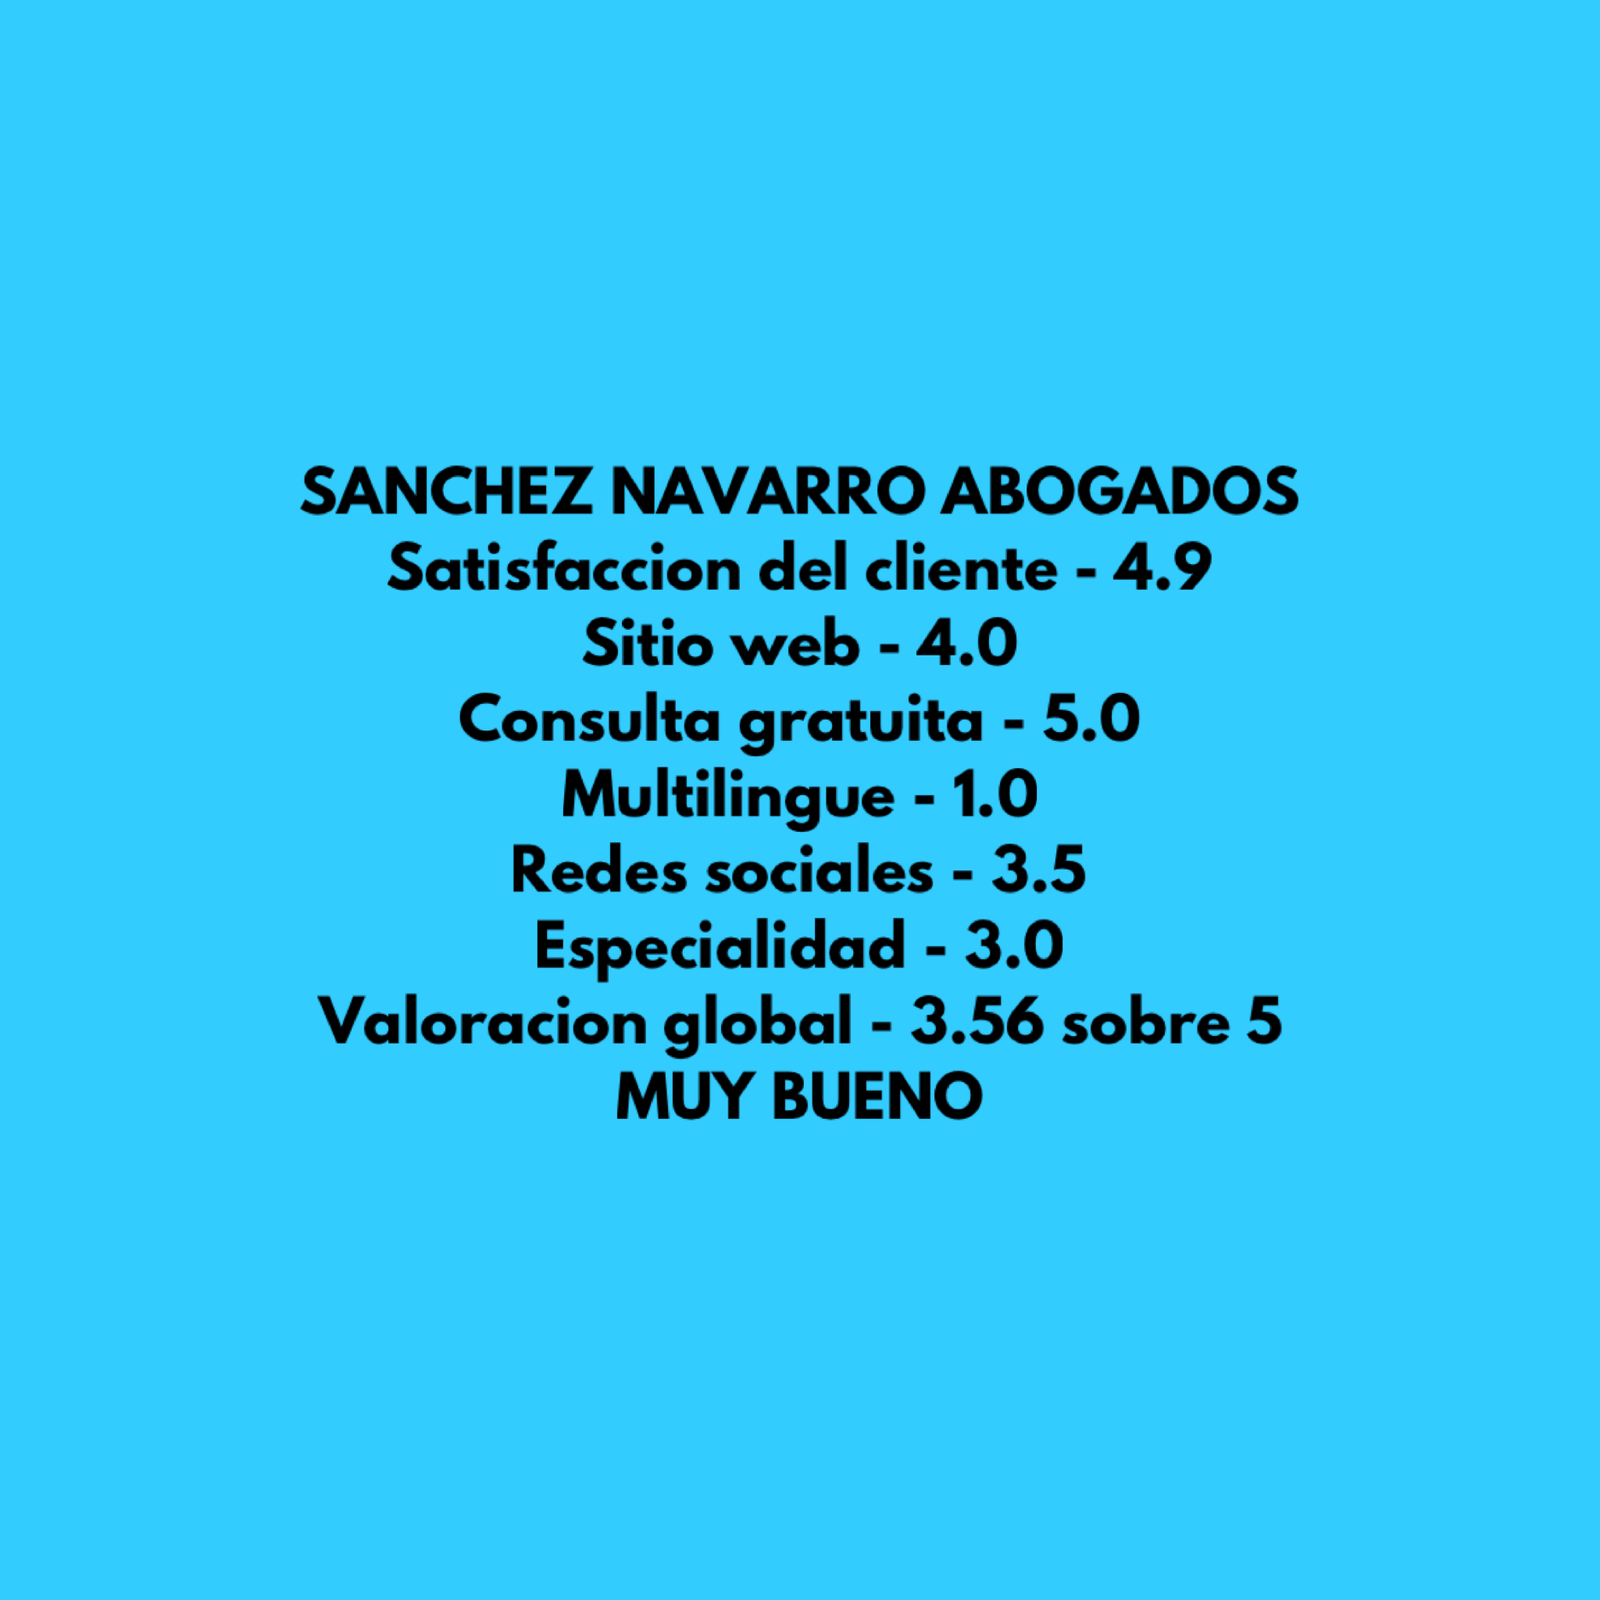 Sanchez Navarro Abogados